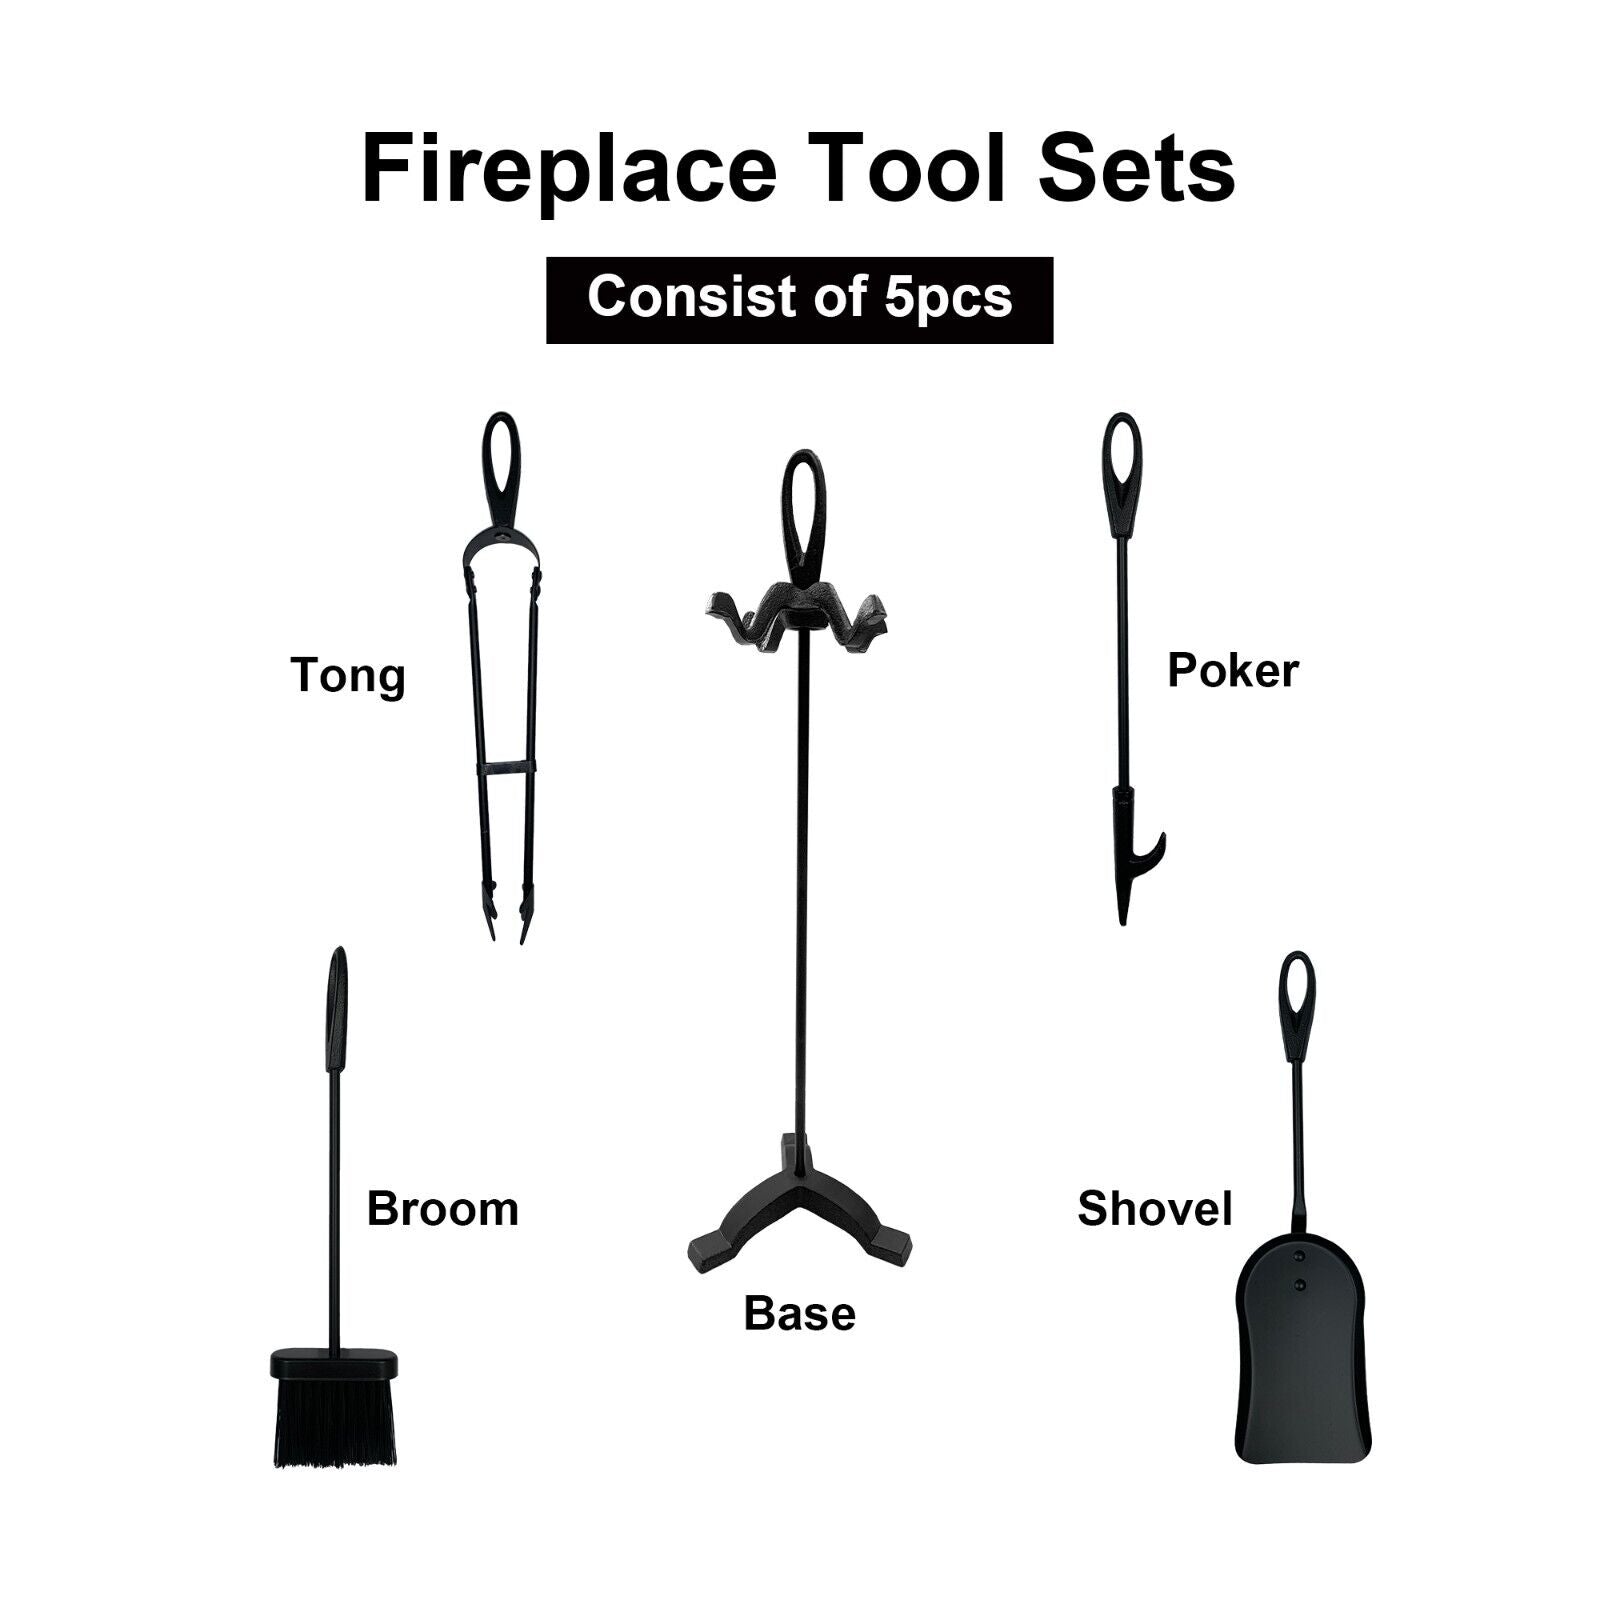 AMOS 5 Piece Metal Fireplace Tool Set with Tong, Poker, Shovel and Broom - Black